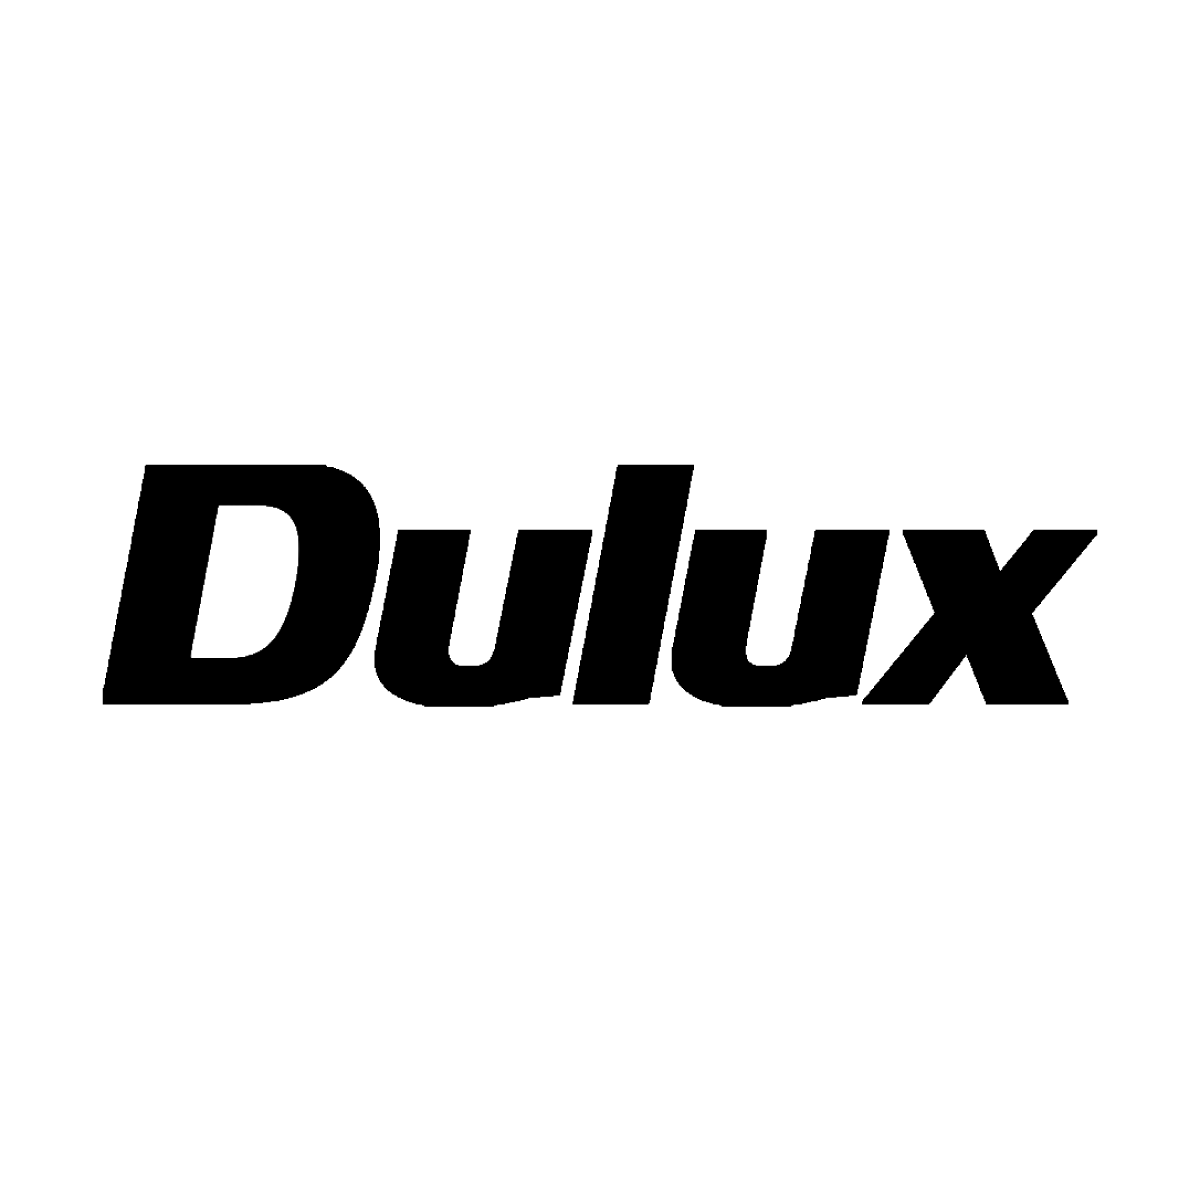 dulux-Logo-Black.png